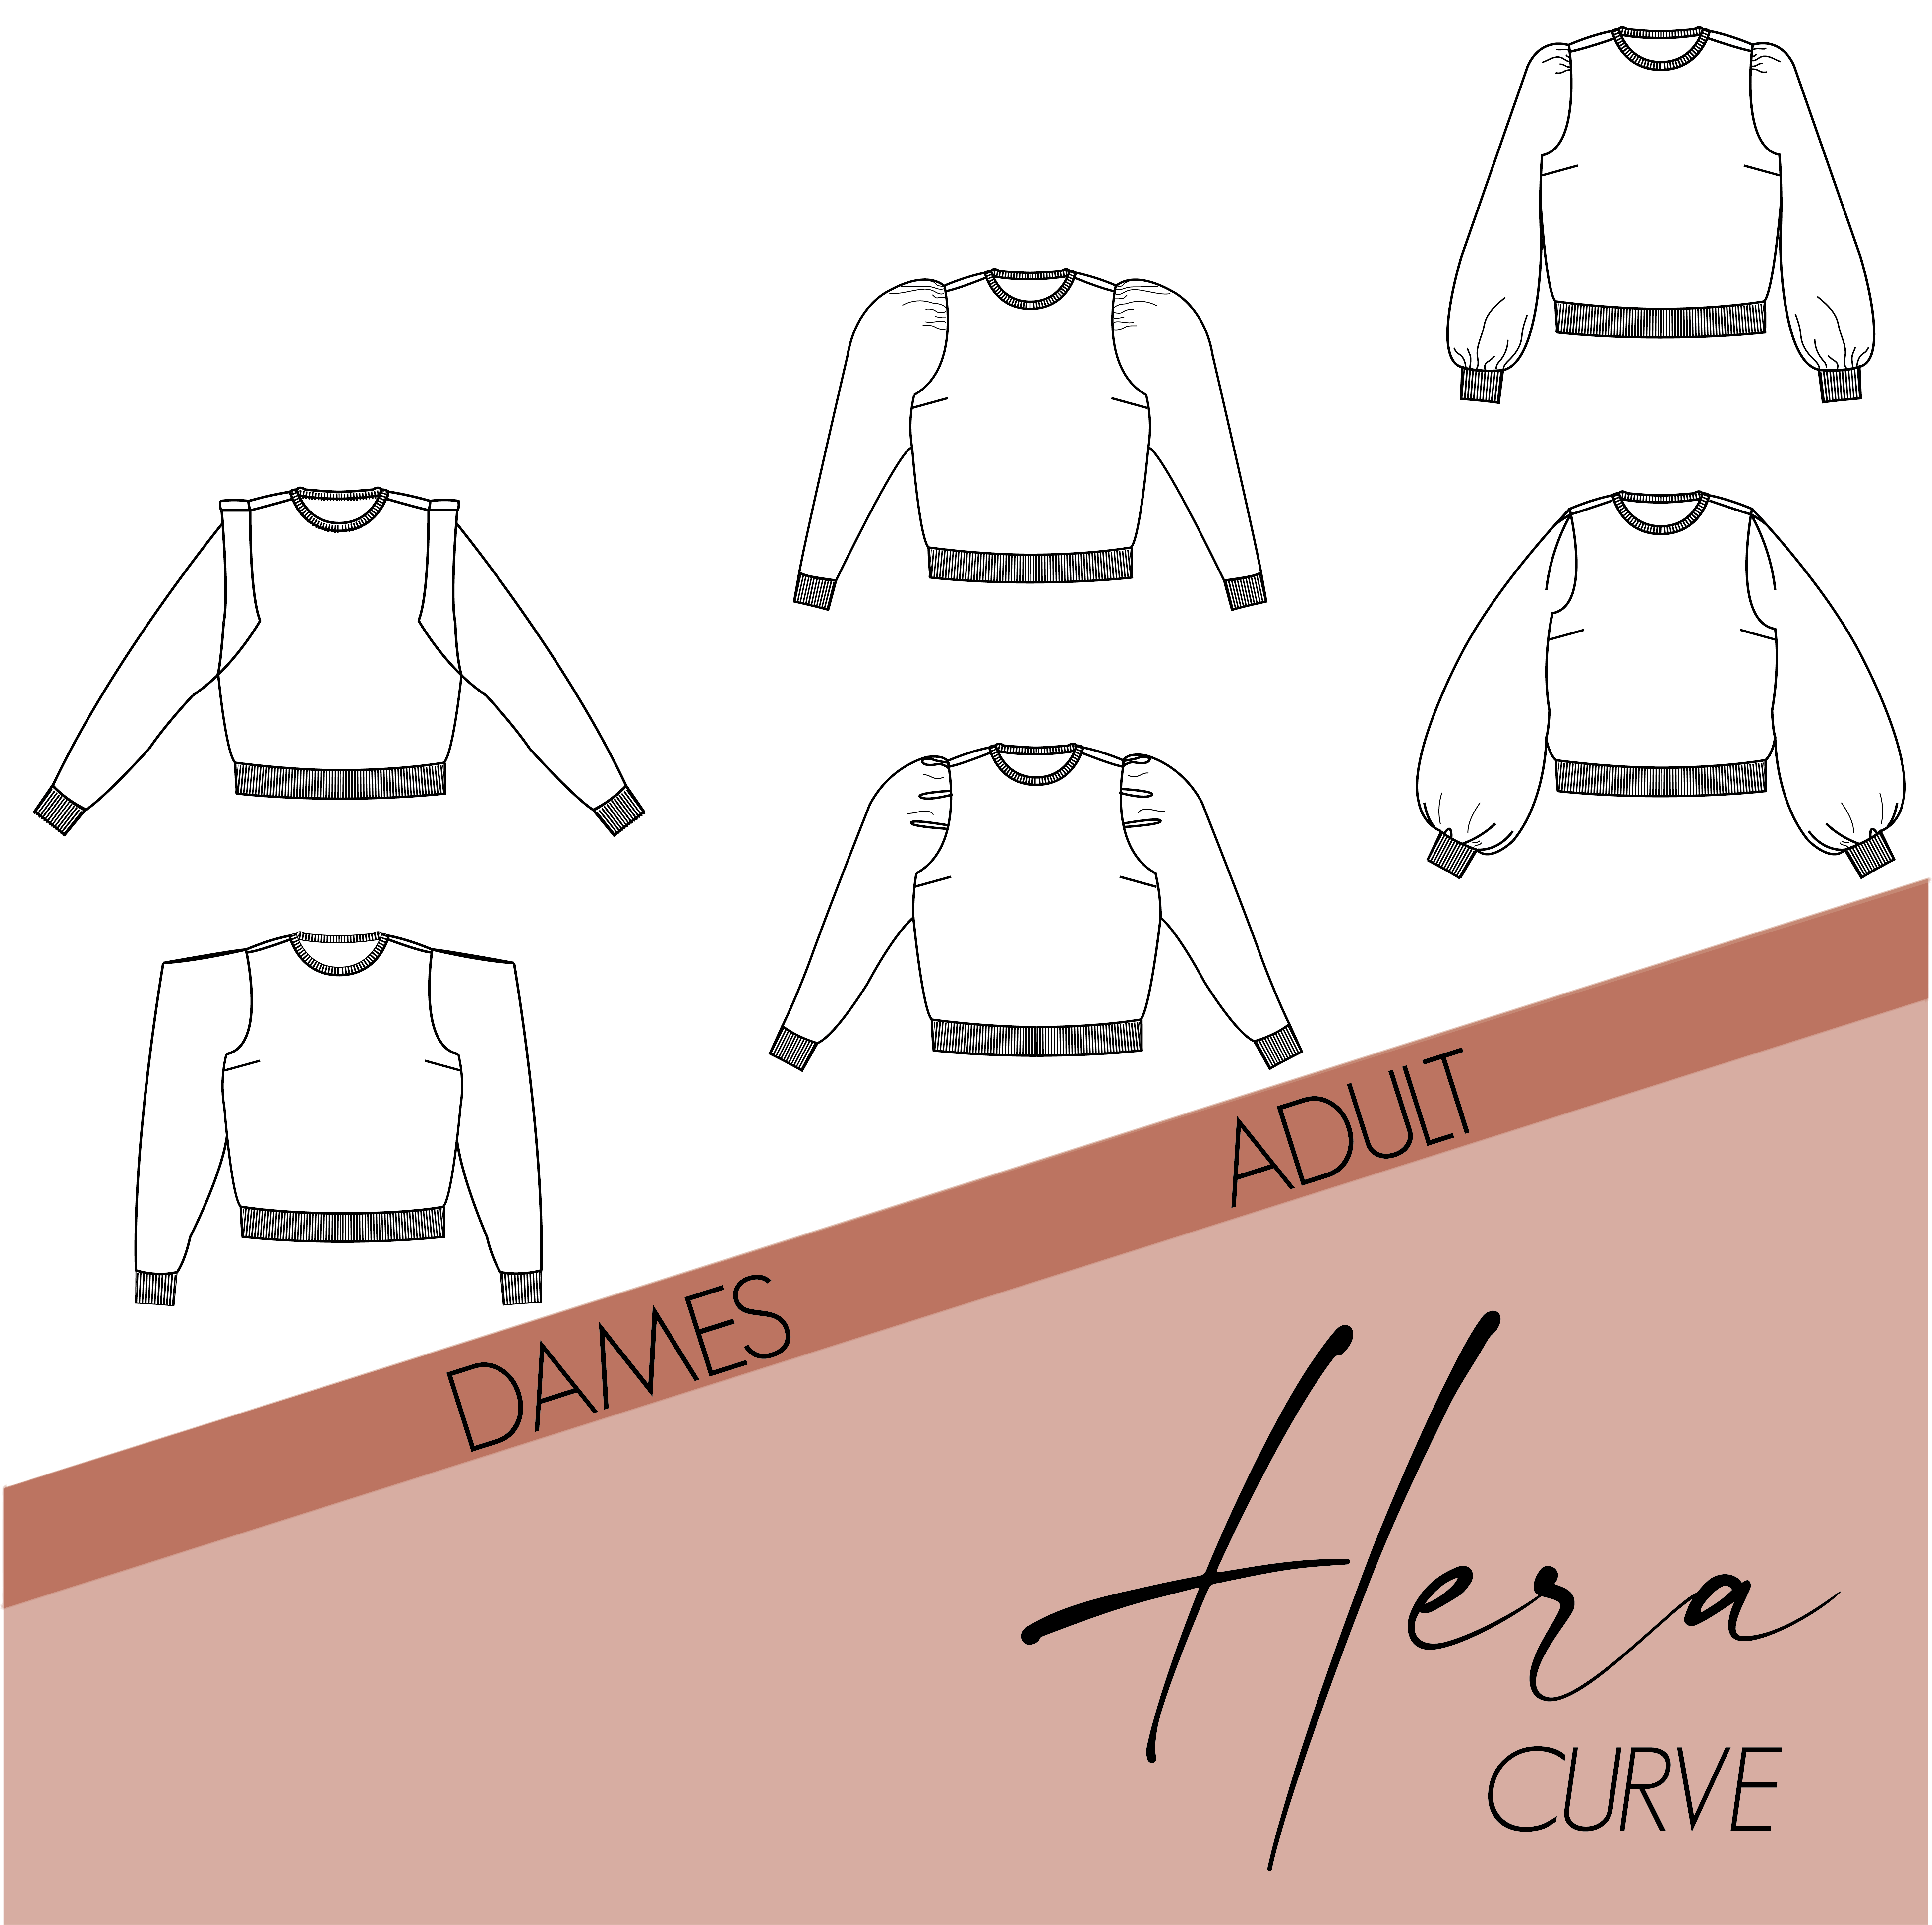 Hera curve - women